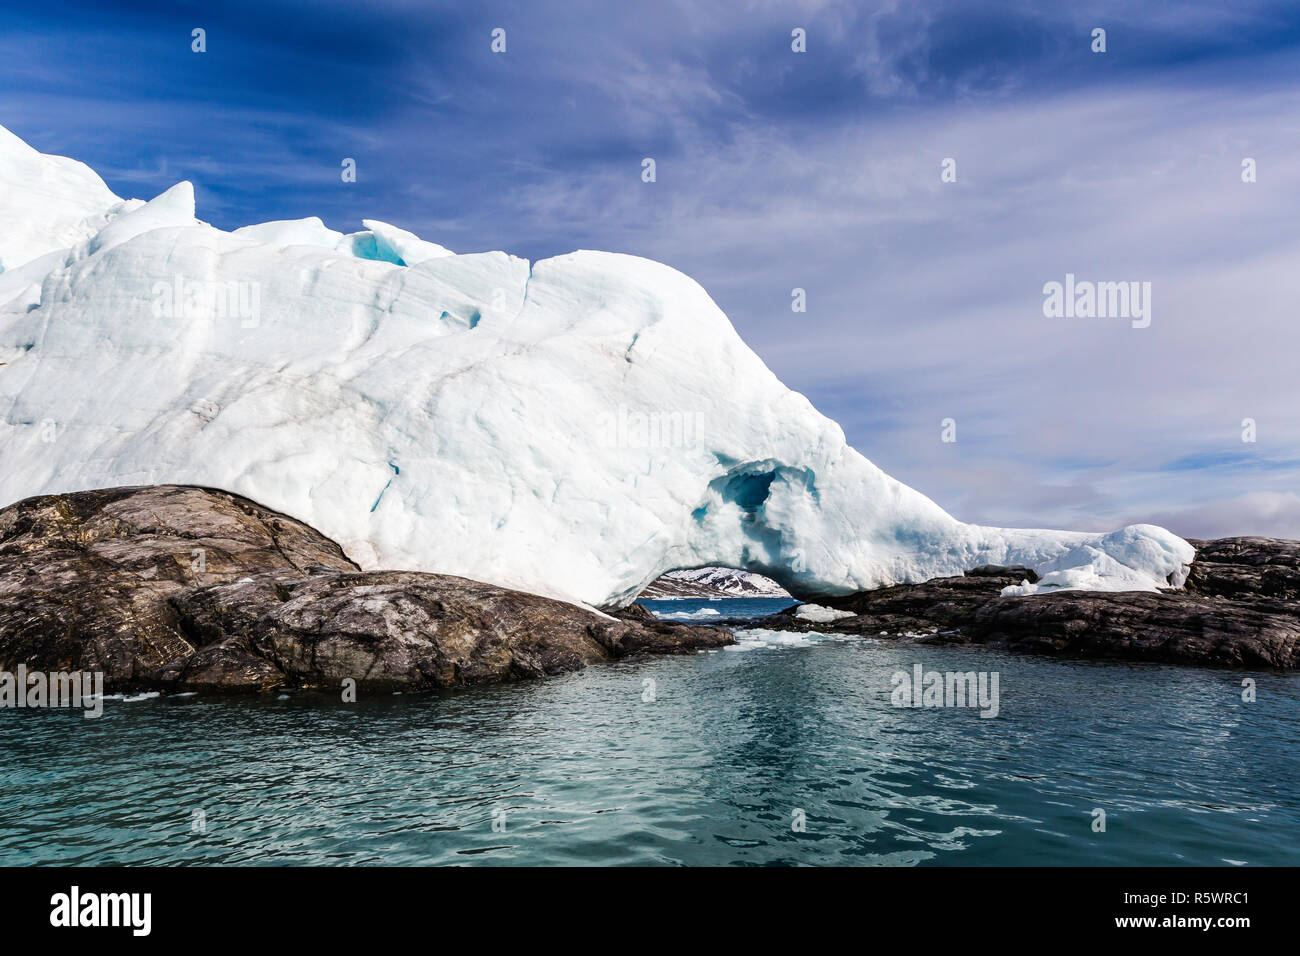 Monacobreen, Monaco Glacier, on the northeastern side of the island of Spitsbergen, Svalbard, Norway. Stock Photo